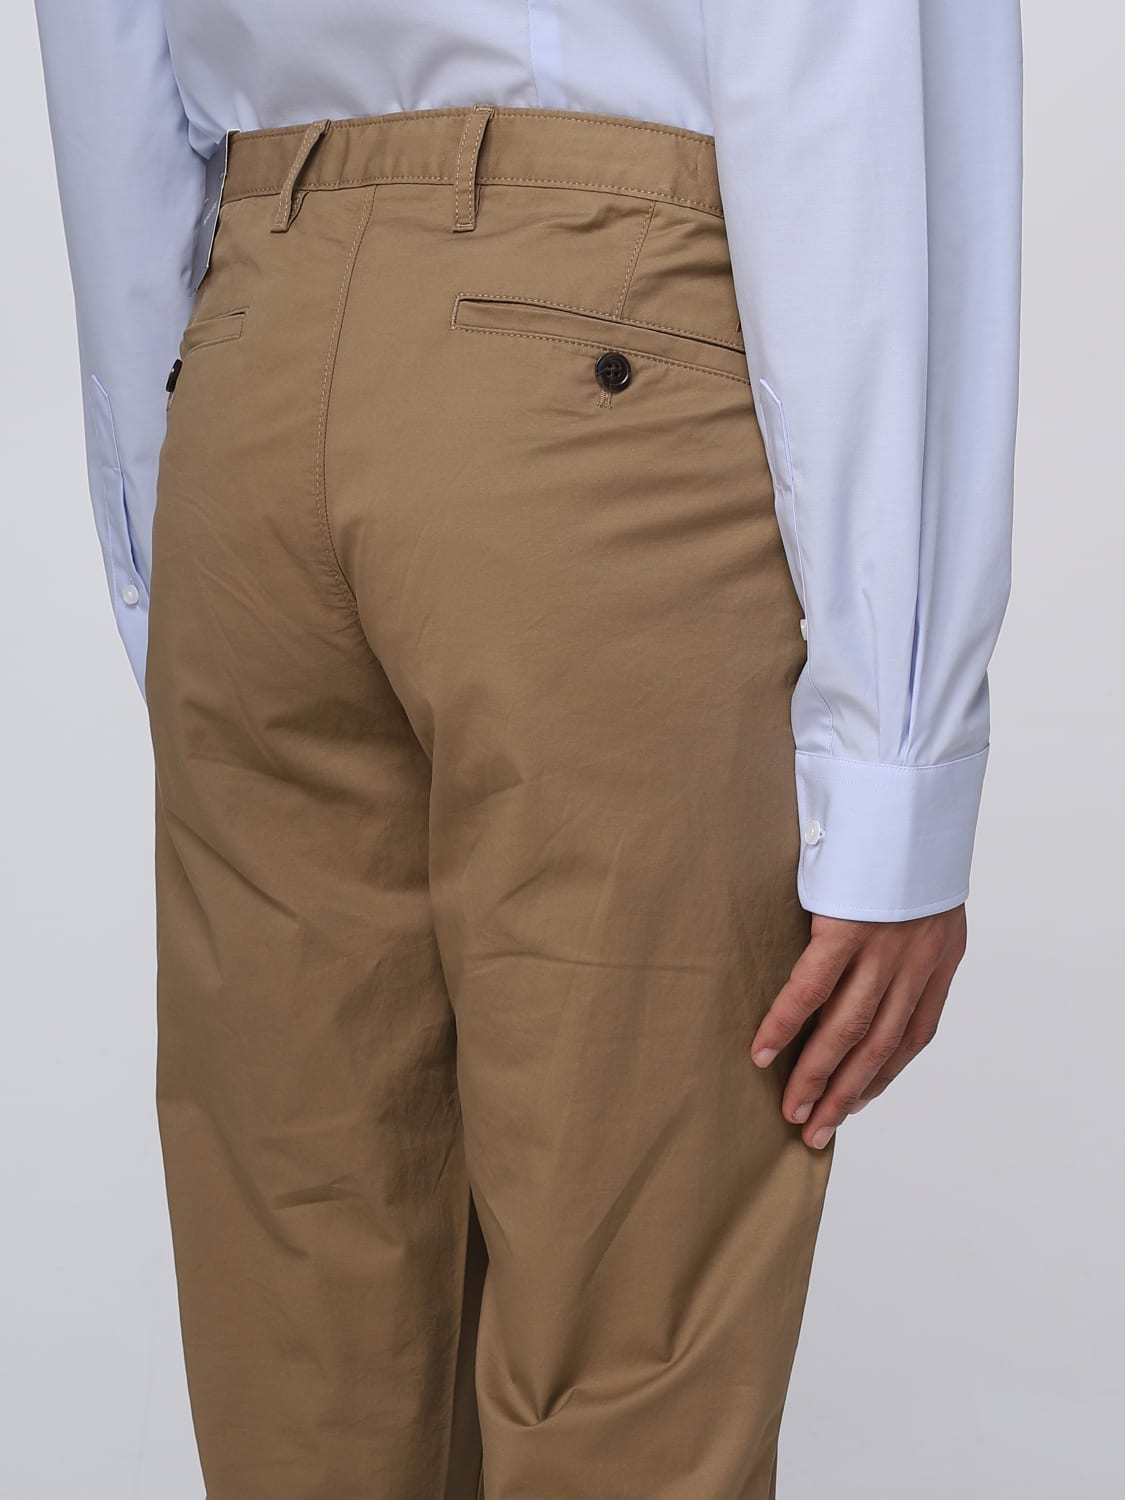 MICHAEL KORS: Michael pants in cotton blend - Kaki | Michael Kors pants ...